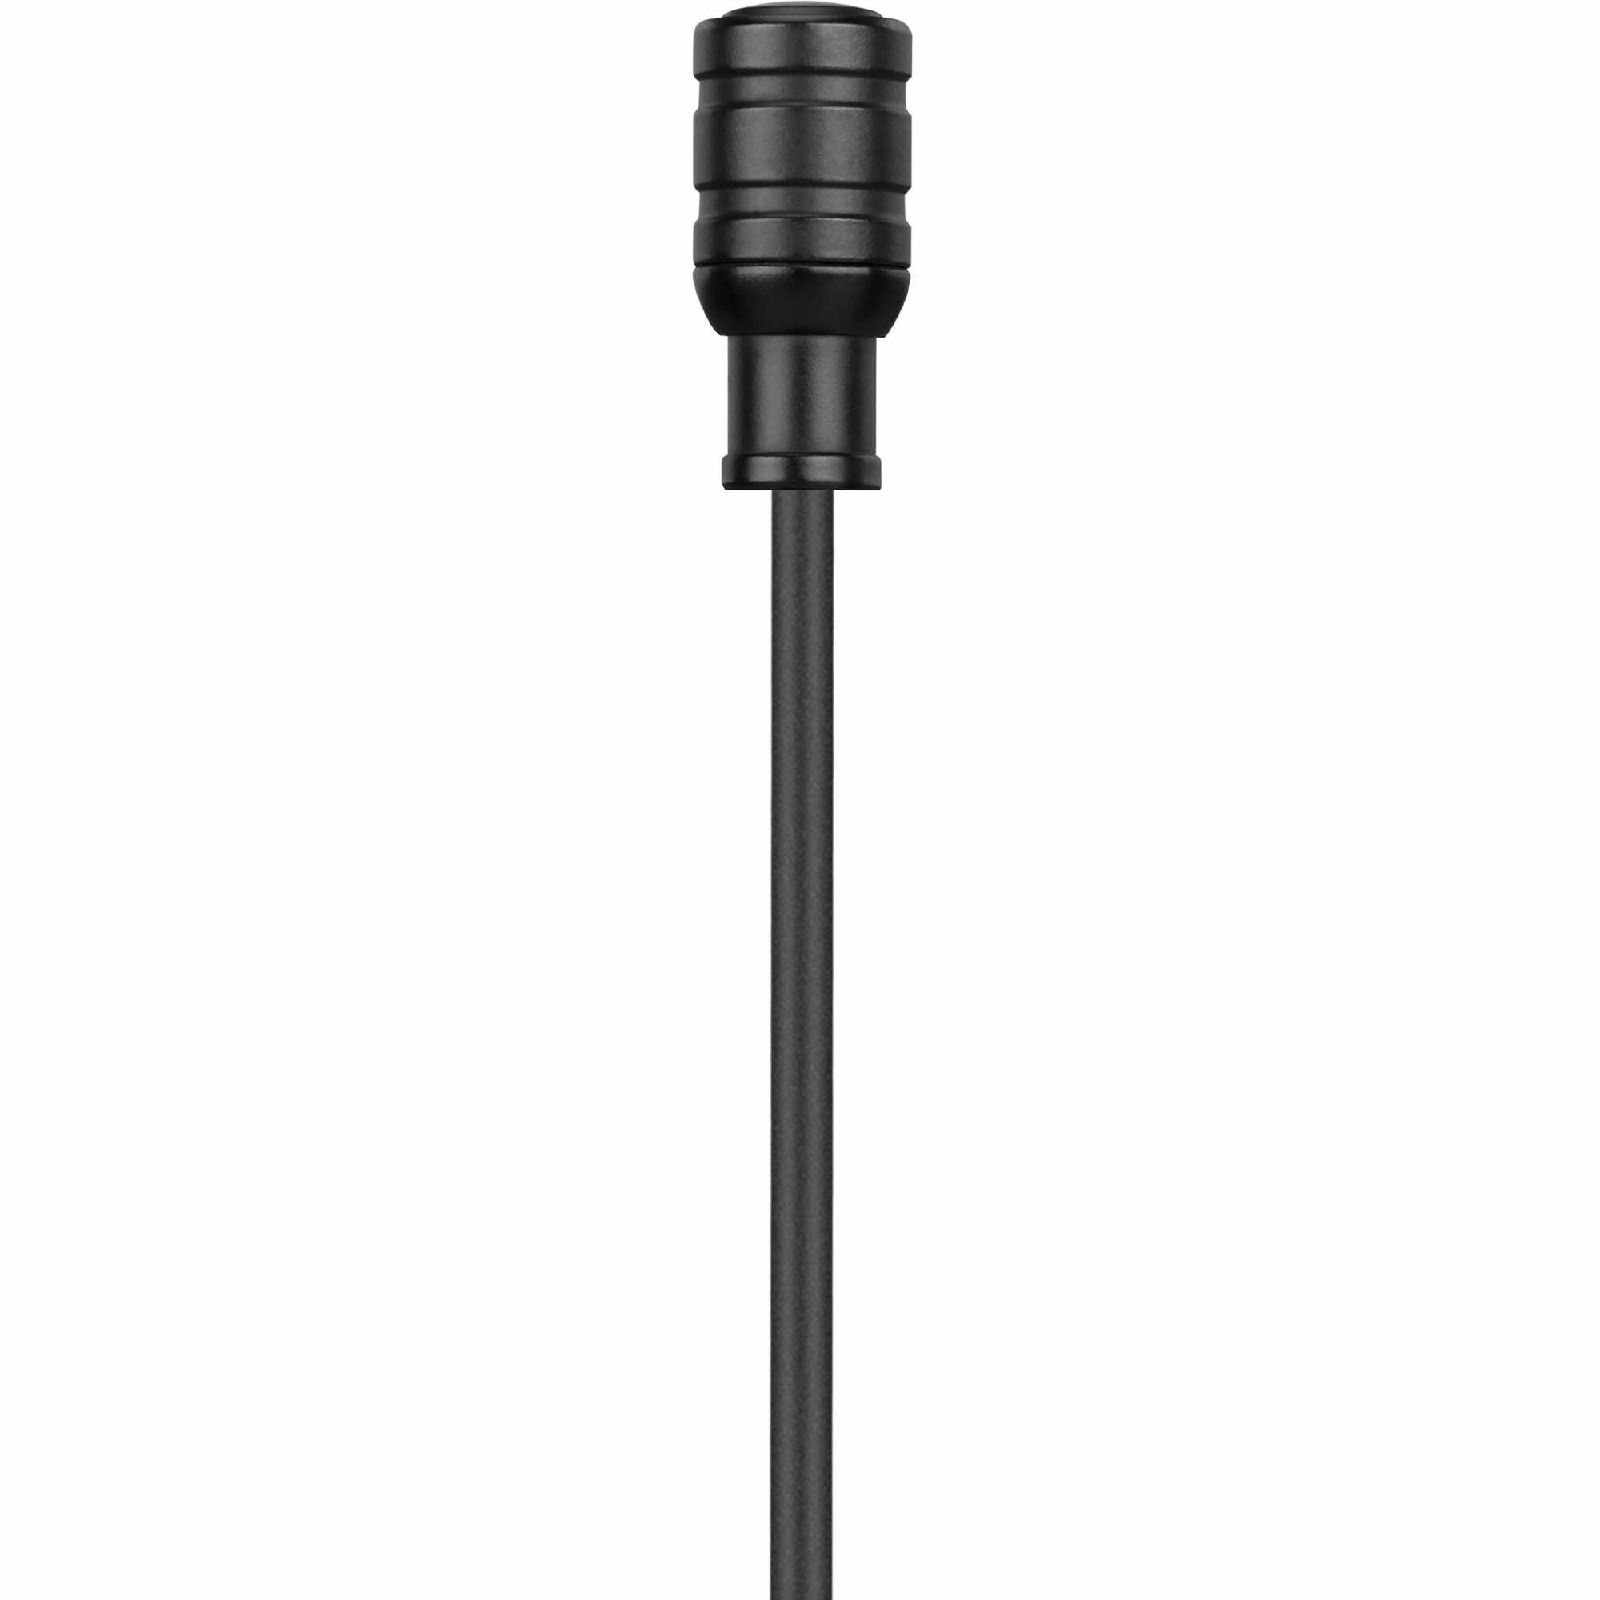 Saramonic DK5B Miniature Waterproof Lavalier Microphone 3.5mm TRS connector vodootporni mikrofon za Sony bežične transmittere